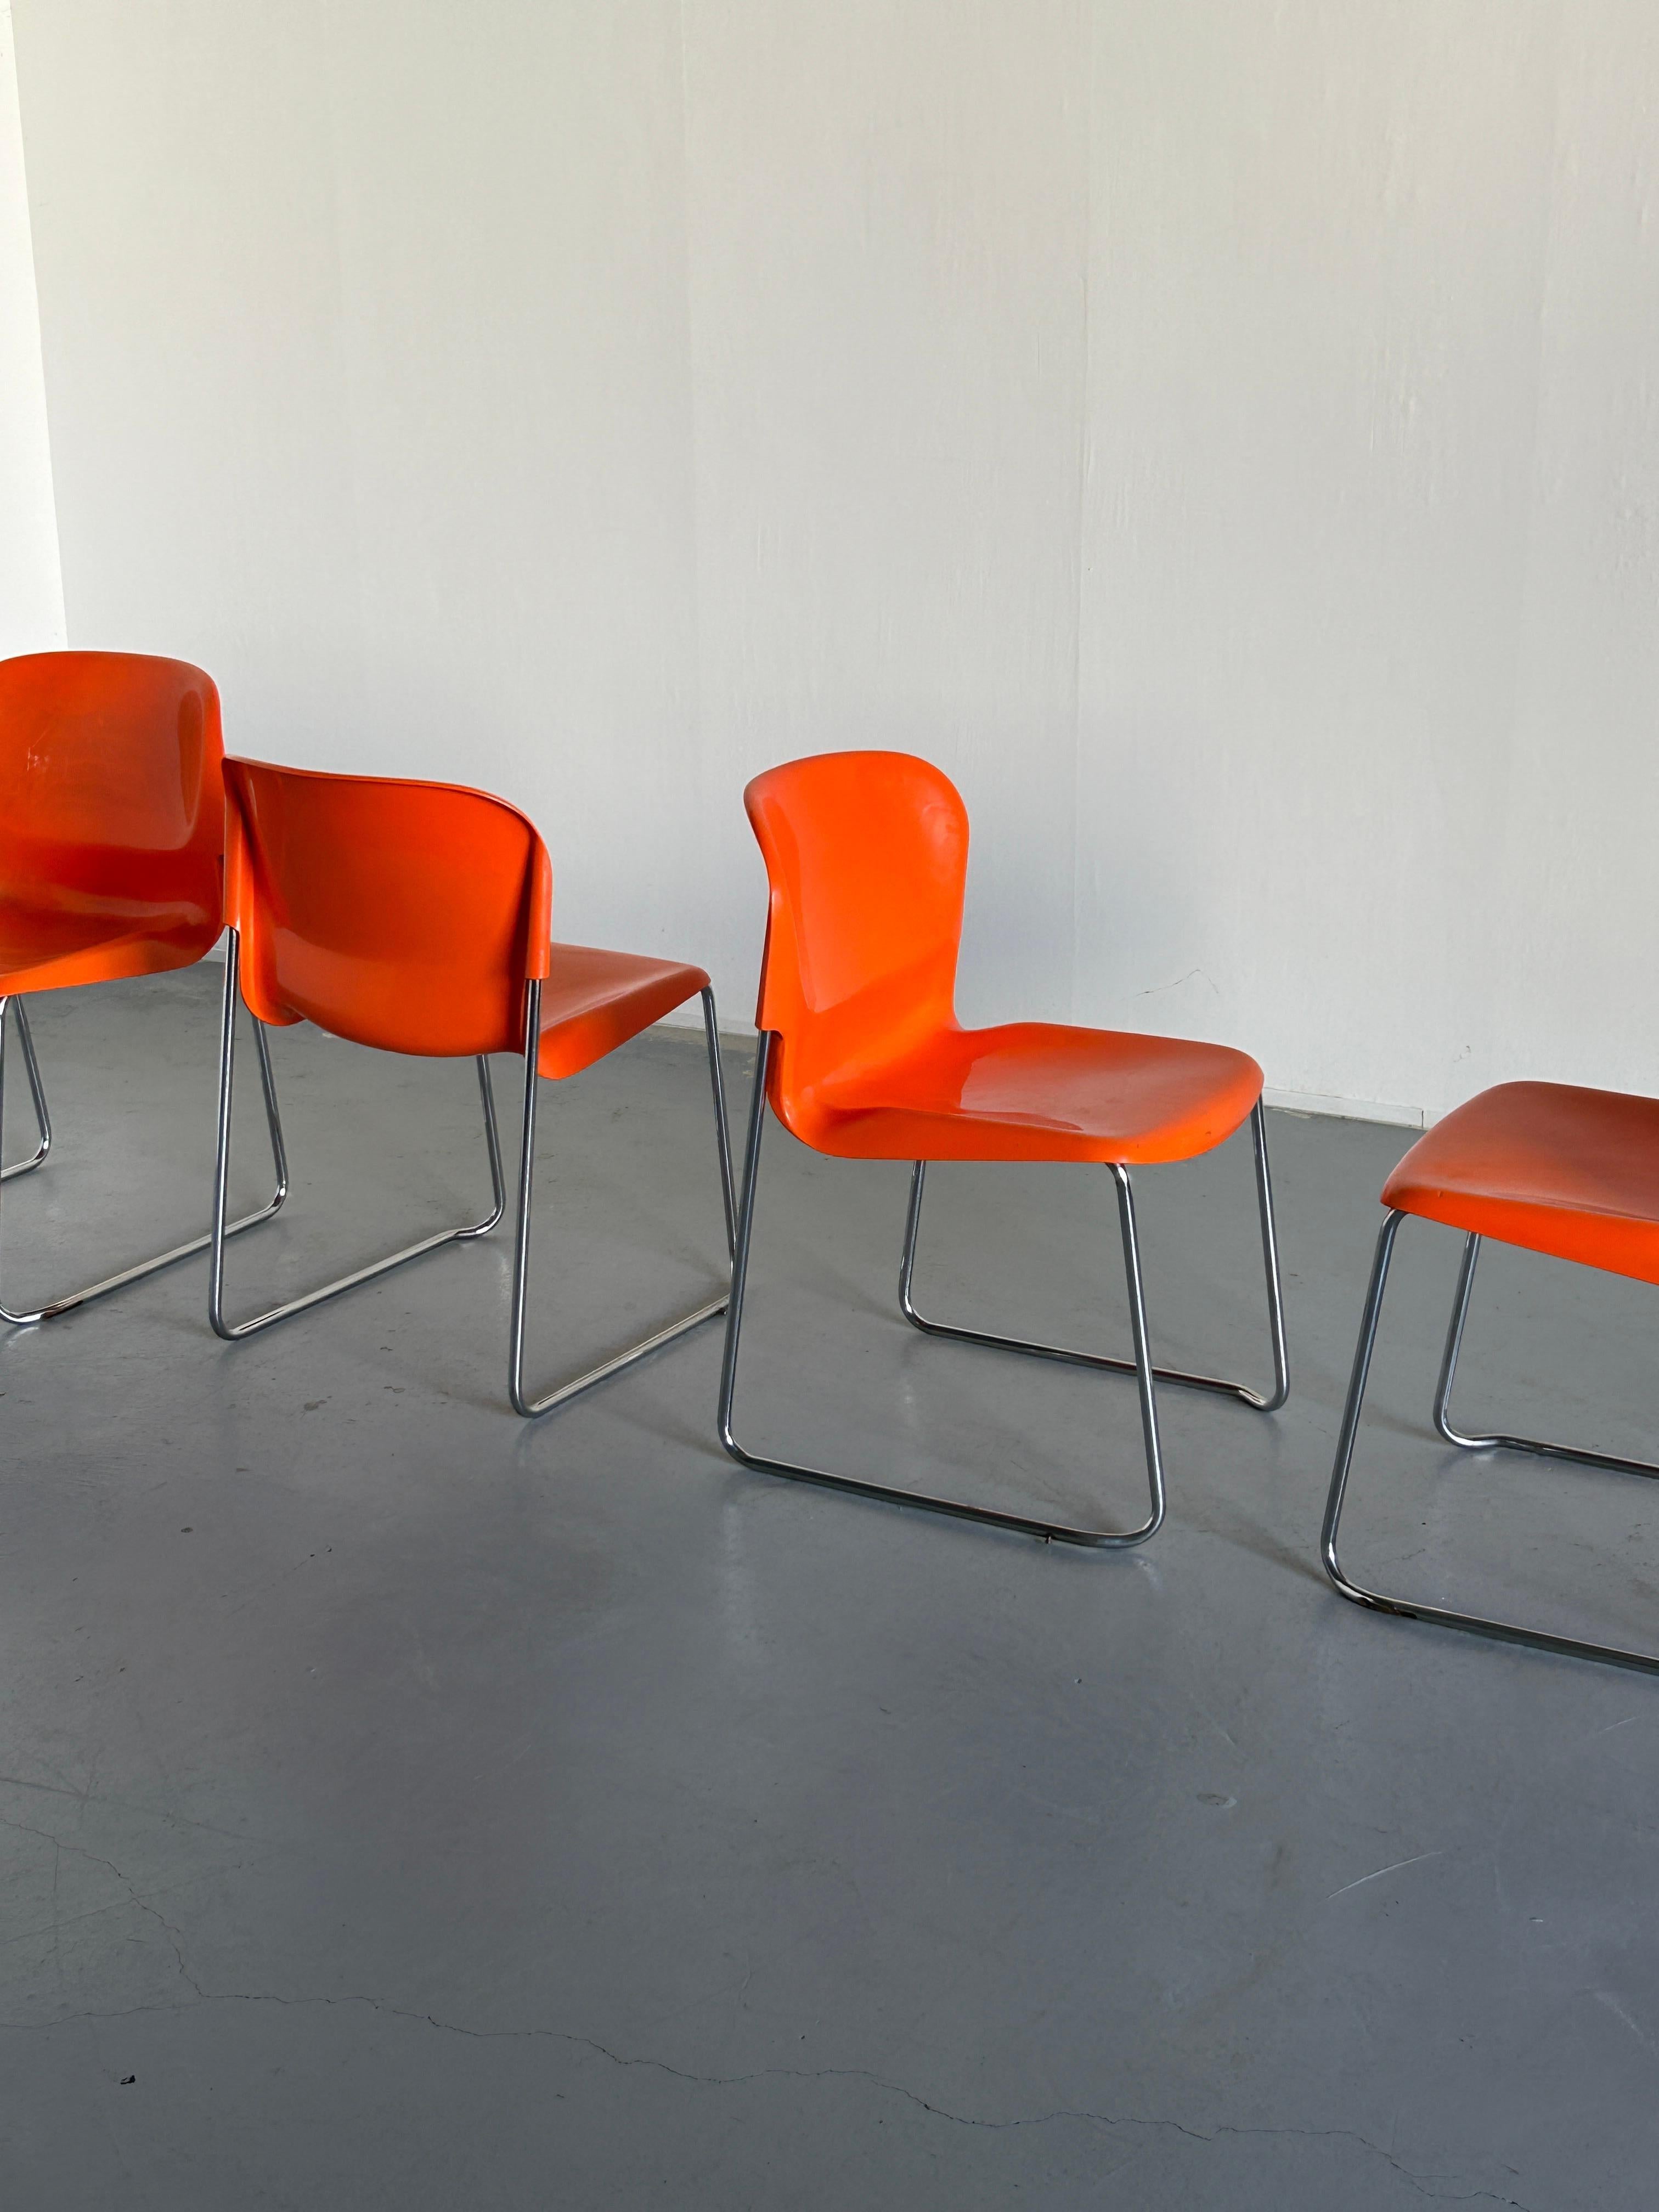 Steel Set of 4 Vintage Orange SM 400 Swing Chairs by Gerd Lange for Drabert, 1979